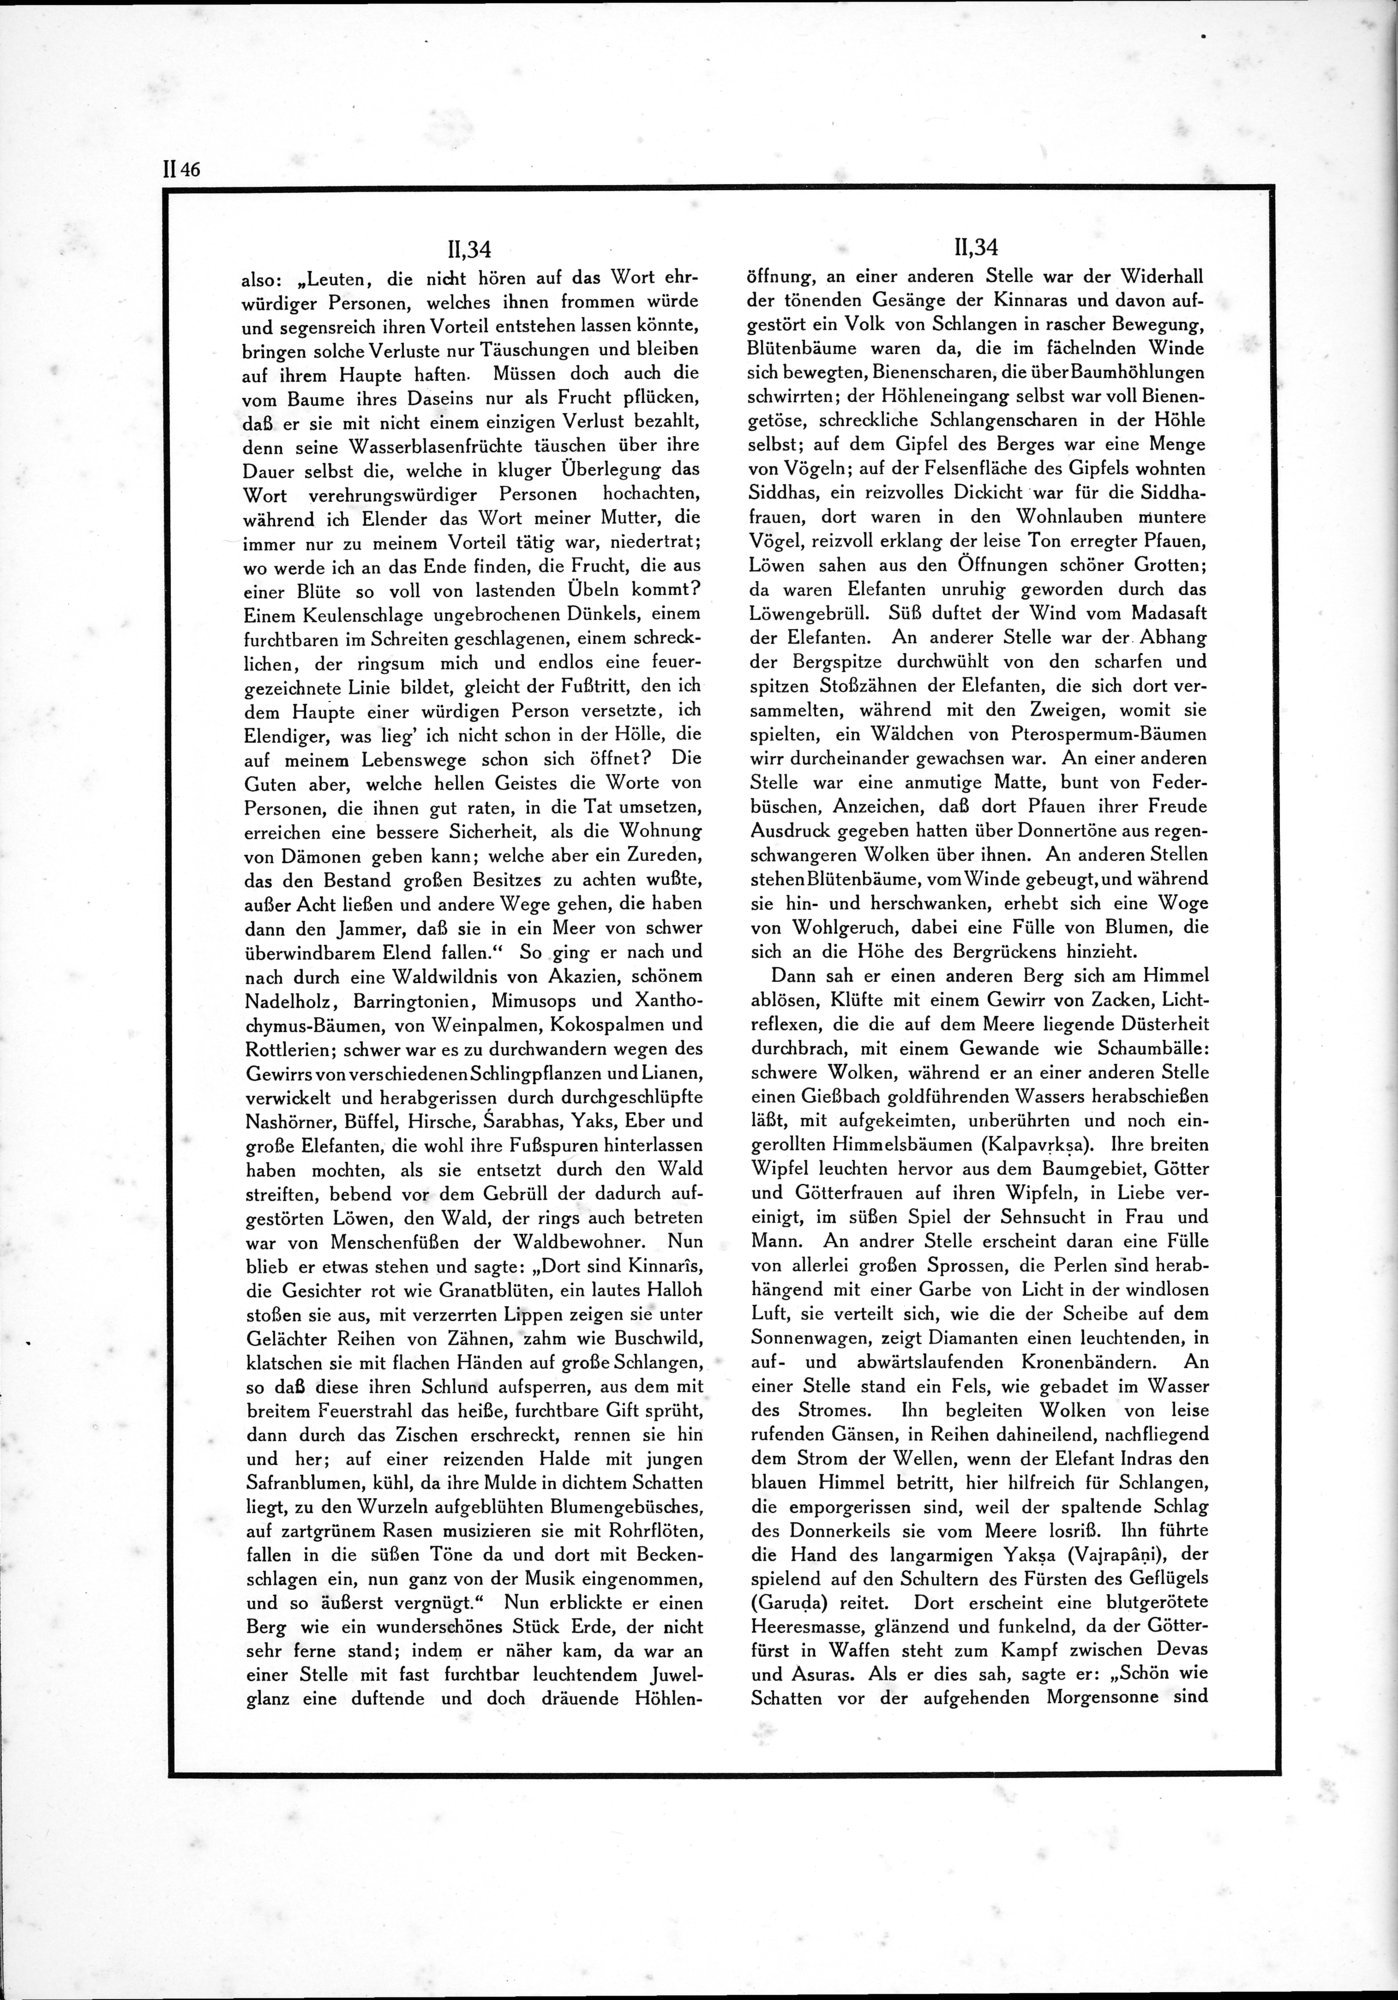 Alt-Kutscha : vol.1 / Page 152 (Grayscale High Resolution Image)